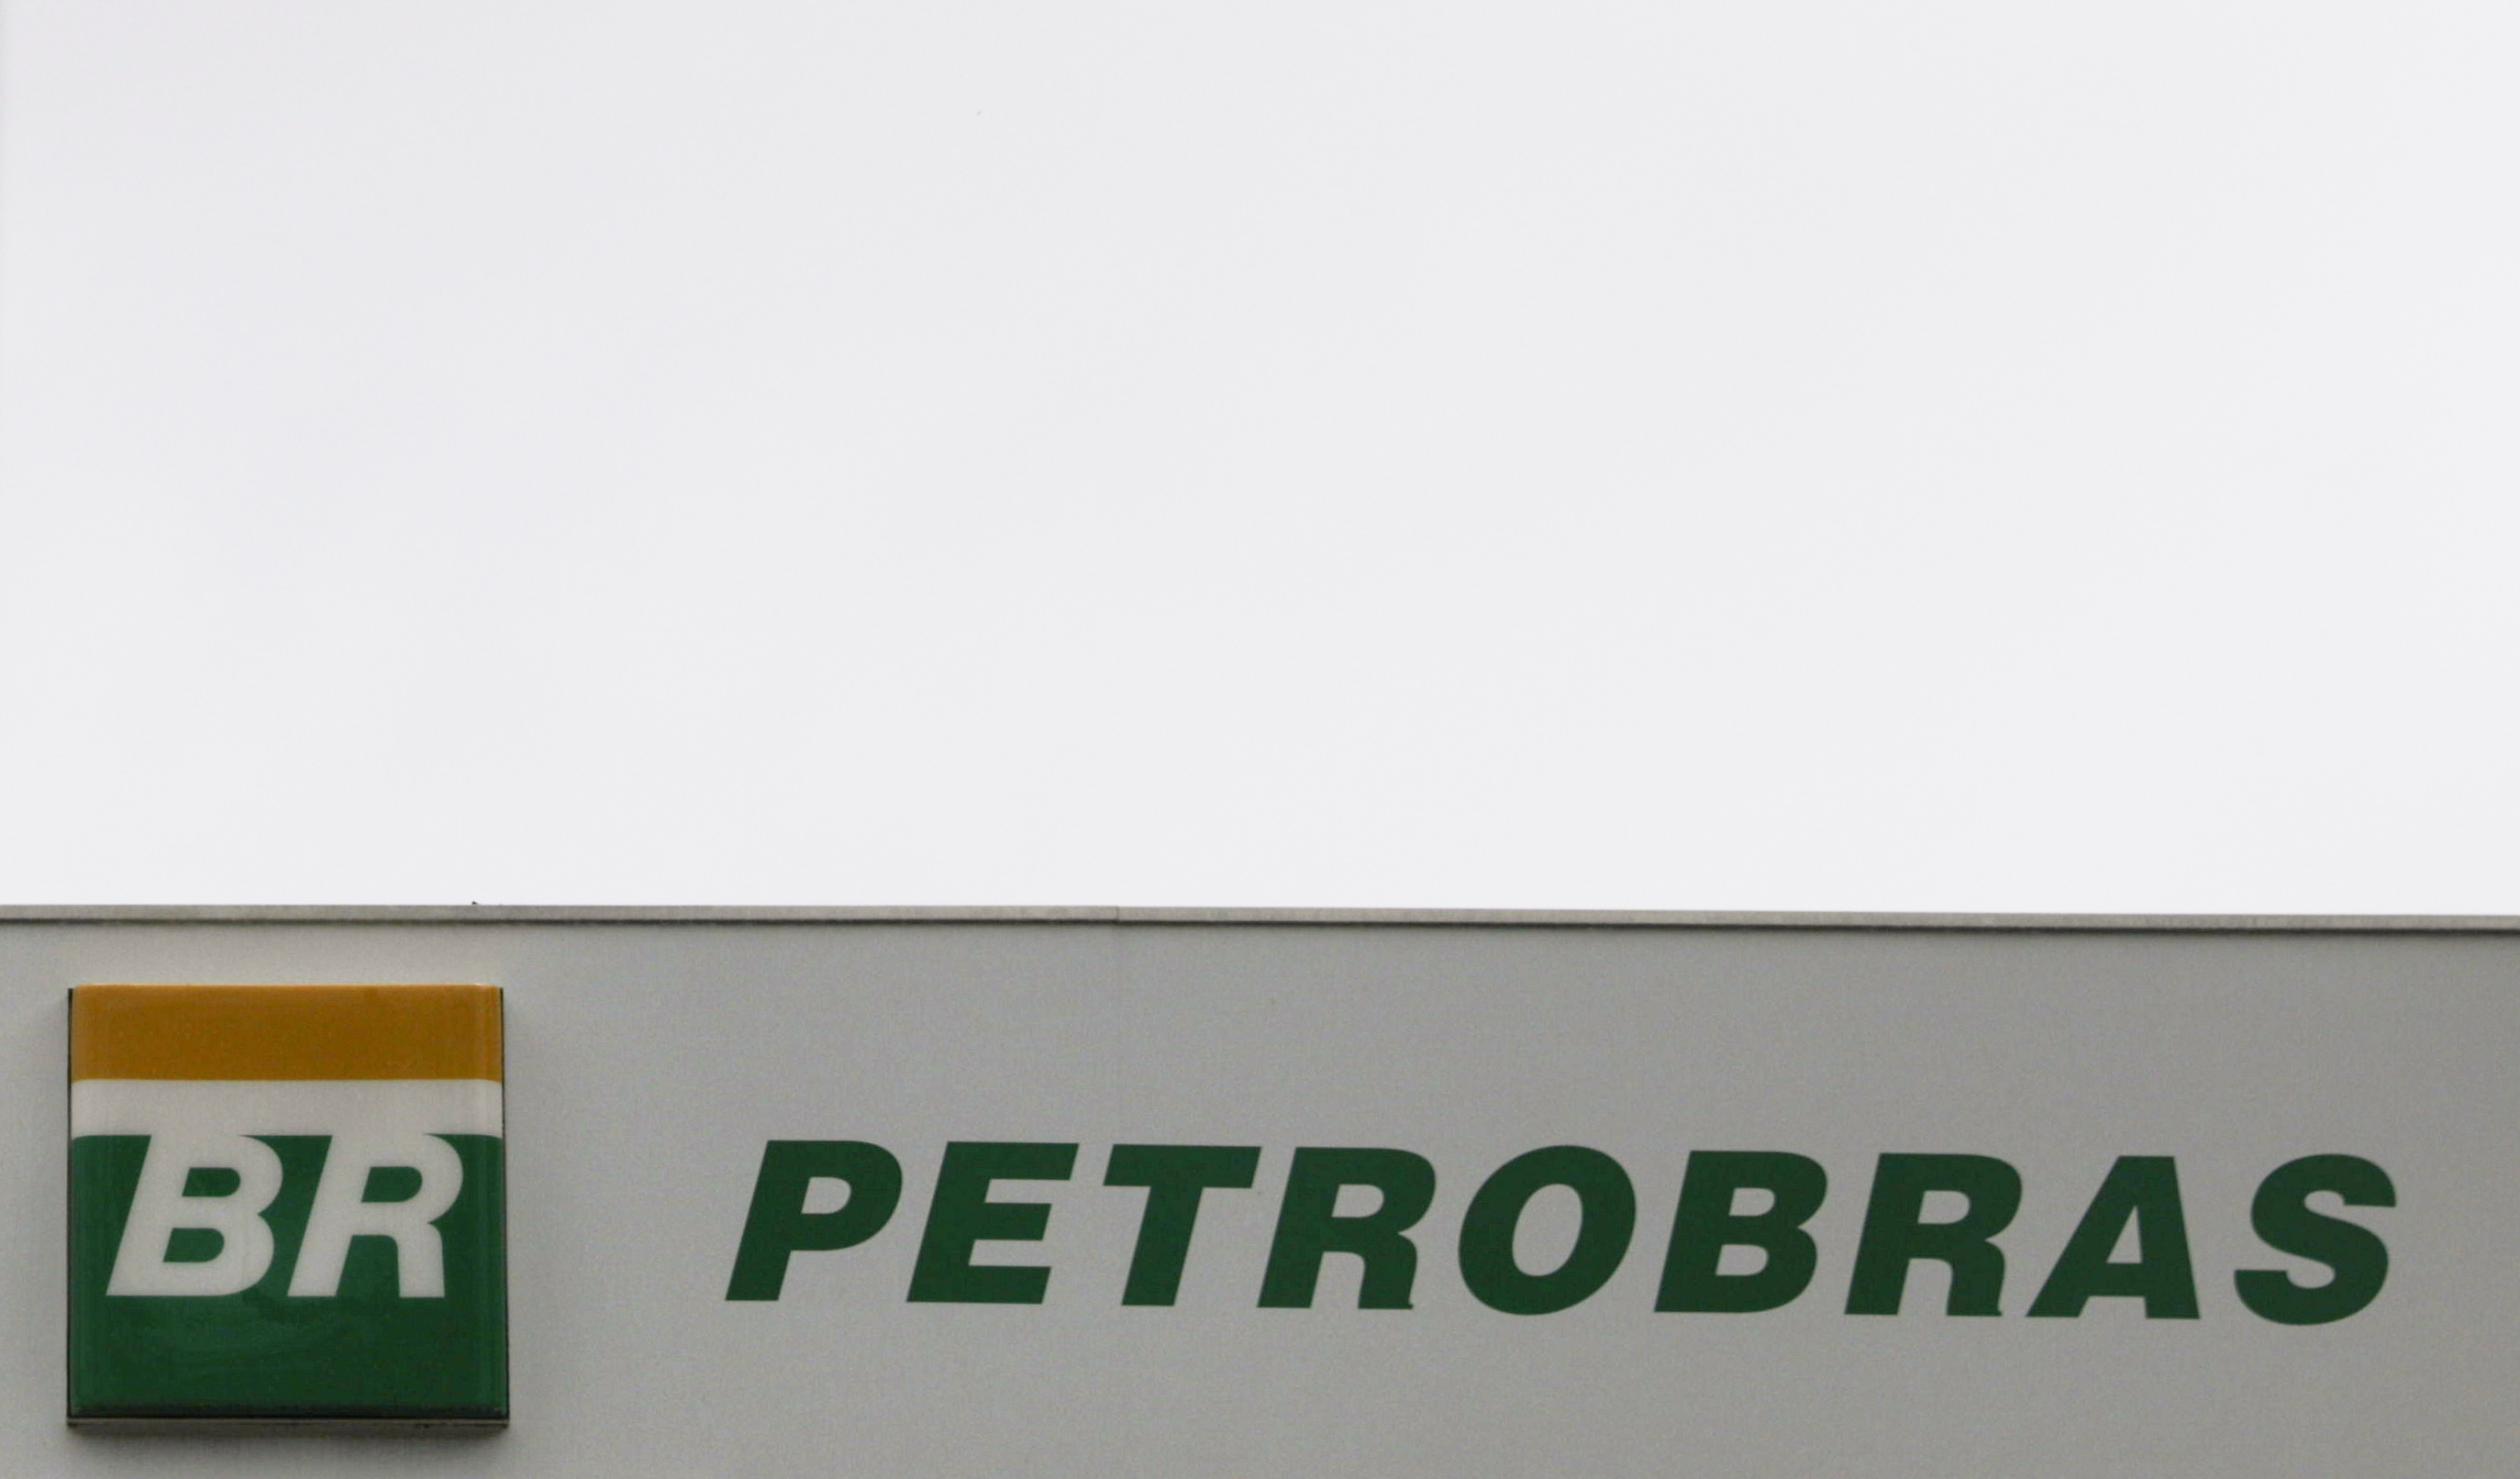 Brazilian oil company Petrobras logo is seen in Rio de Janeiro